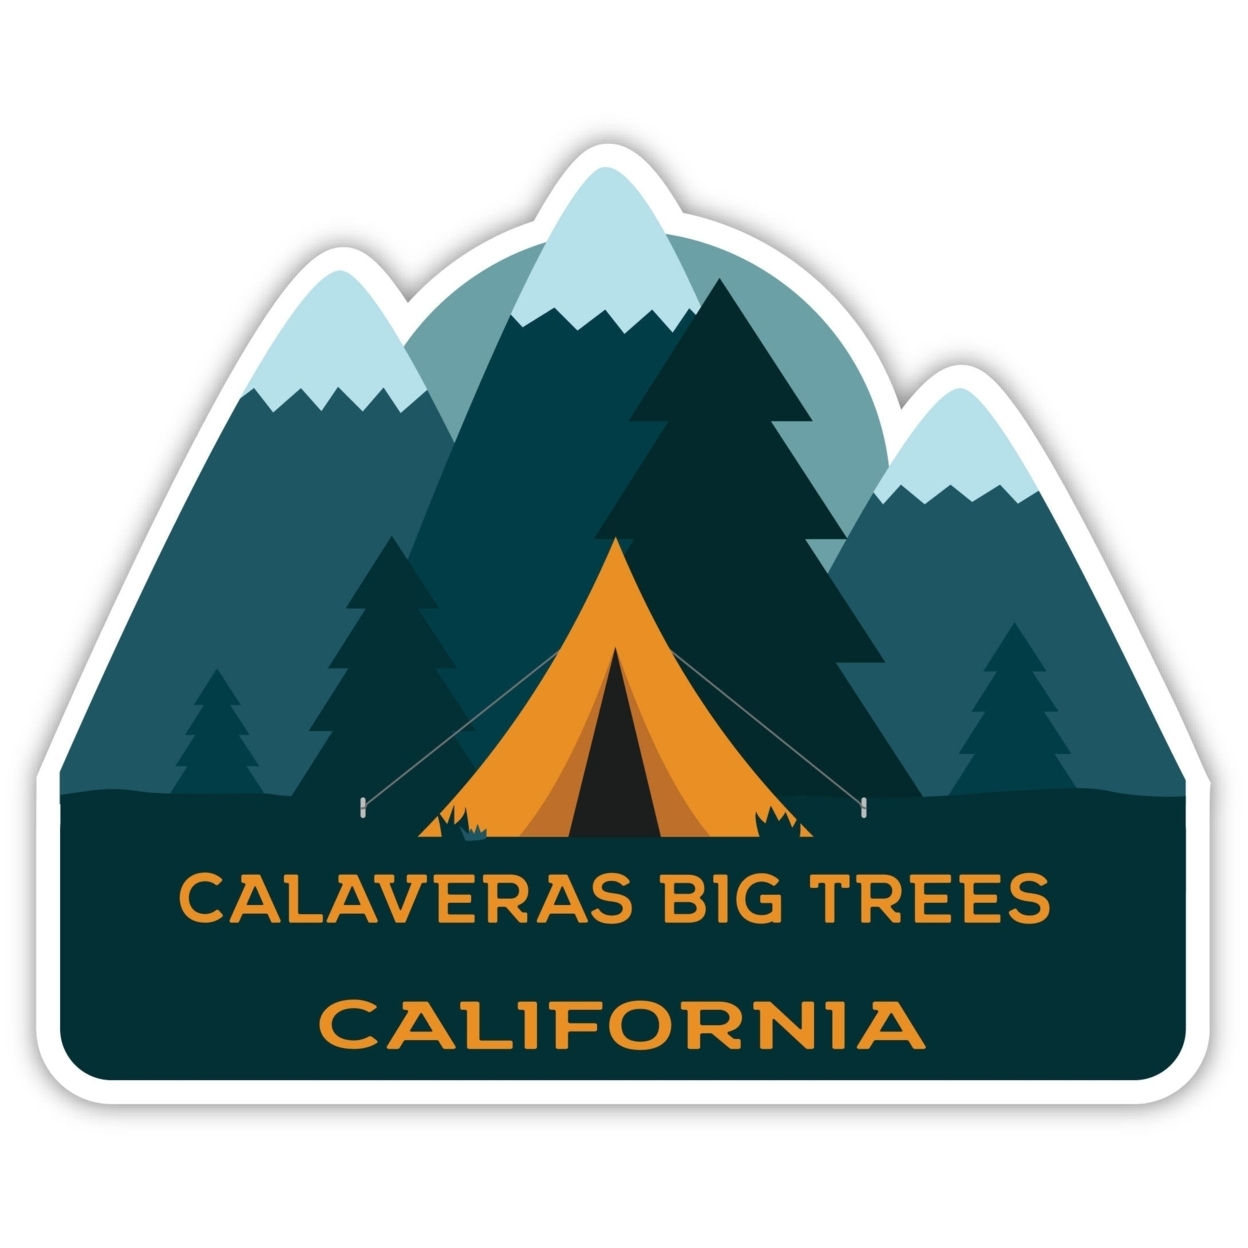 Calaveras Big Trees California Souvenir Decorative Stickers (Choose Theme And Size) - 4-Pack, 8-Inch, Tent